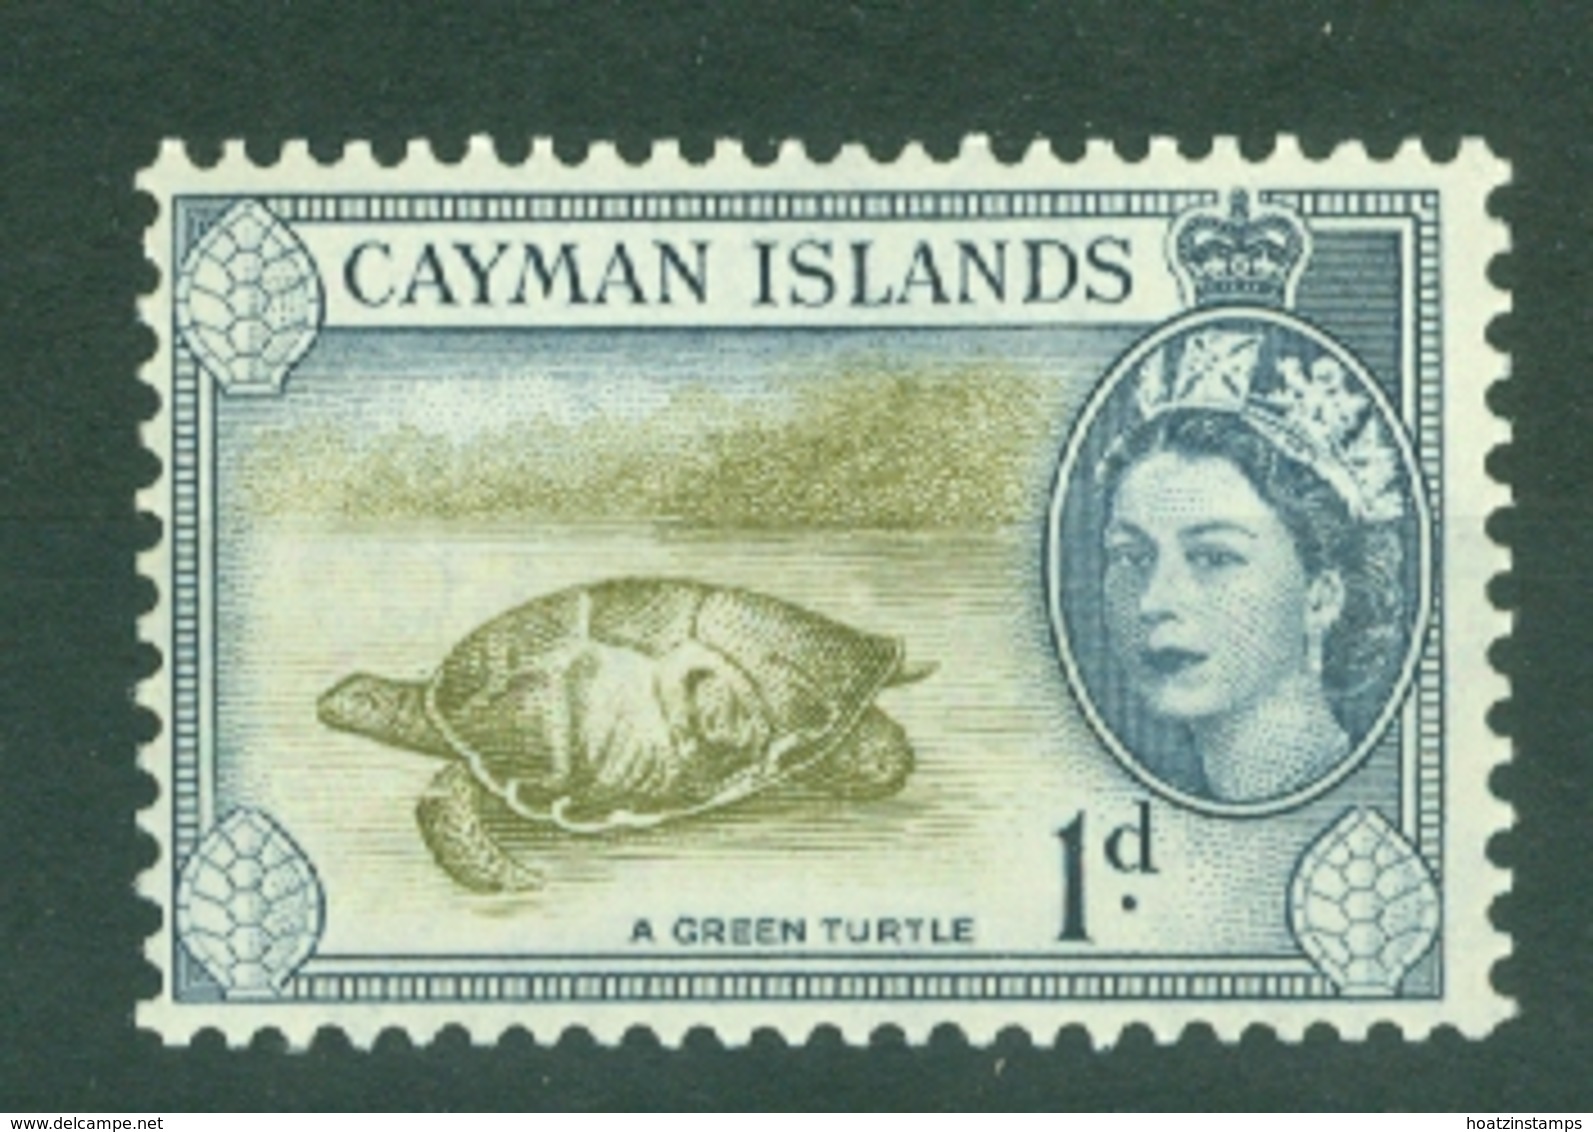 Cayman Islands: 1953/62   QE II - Pictorial   SG150   1d     MH - Cayman Islands